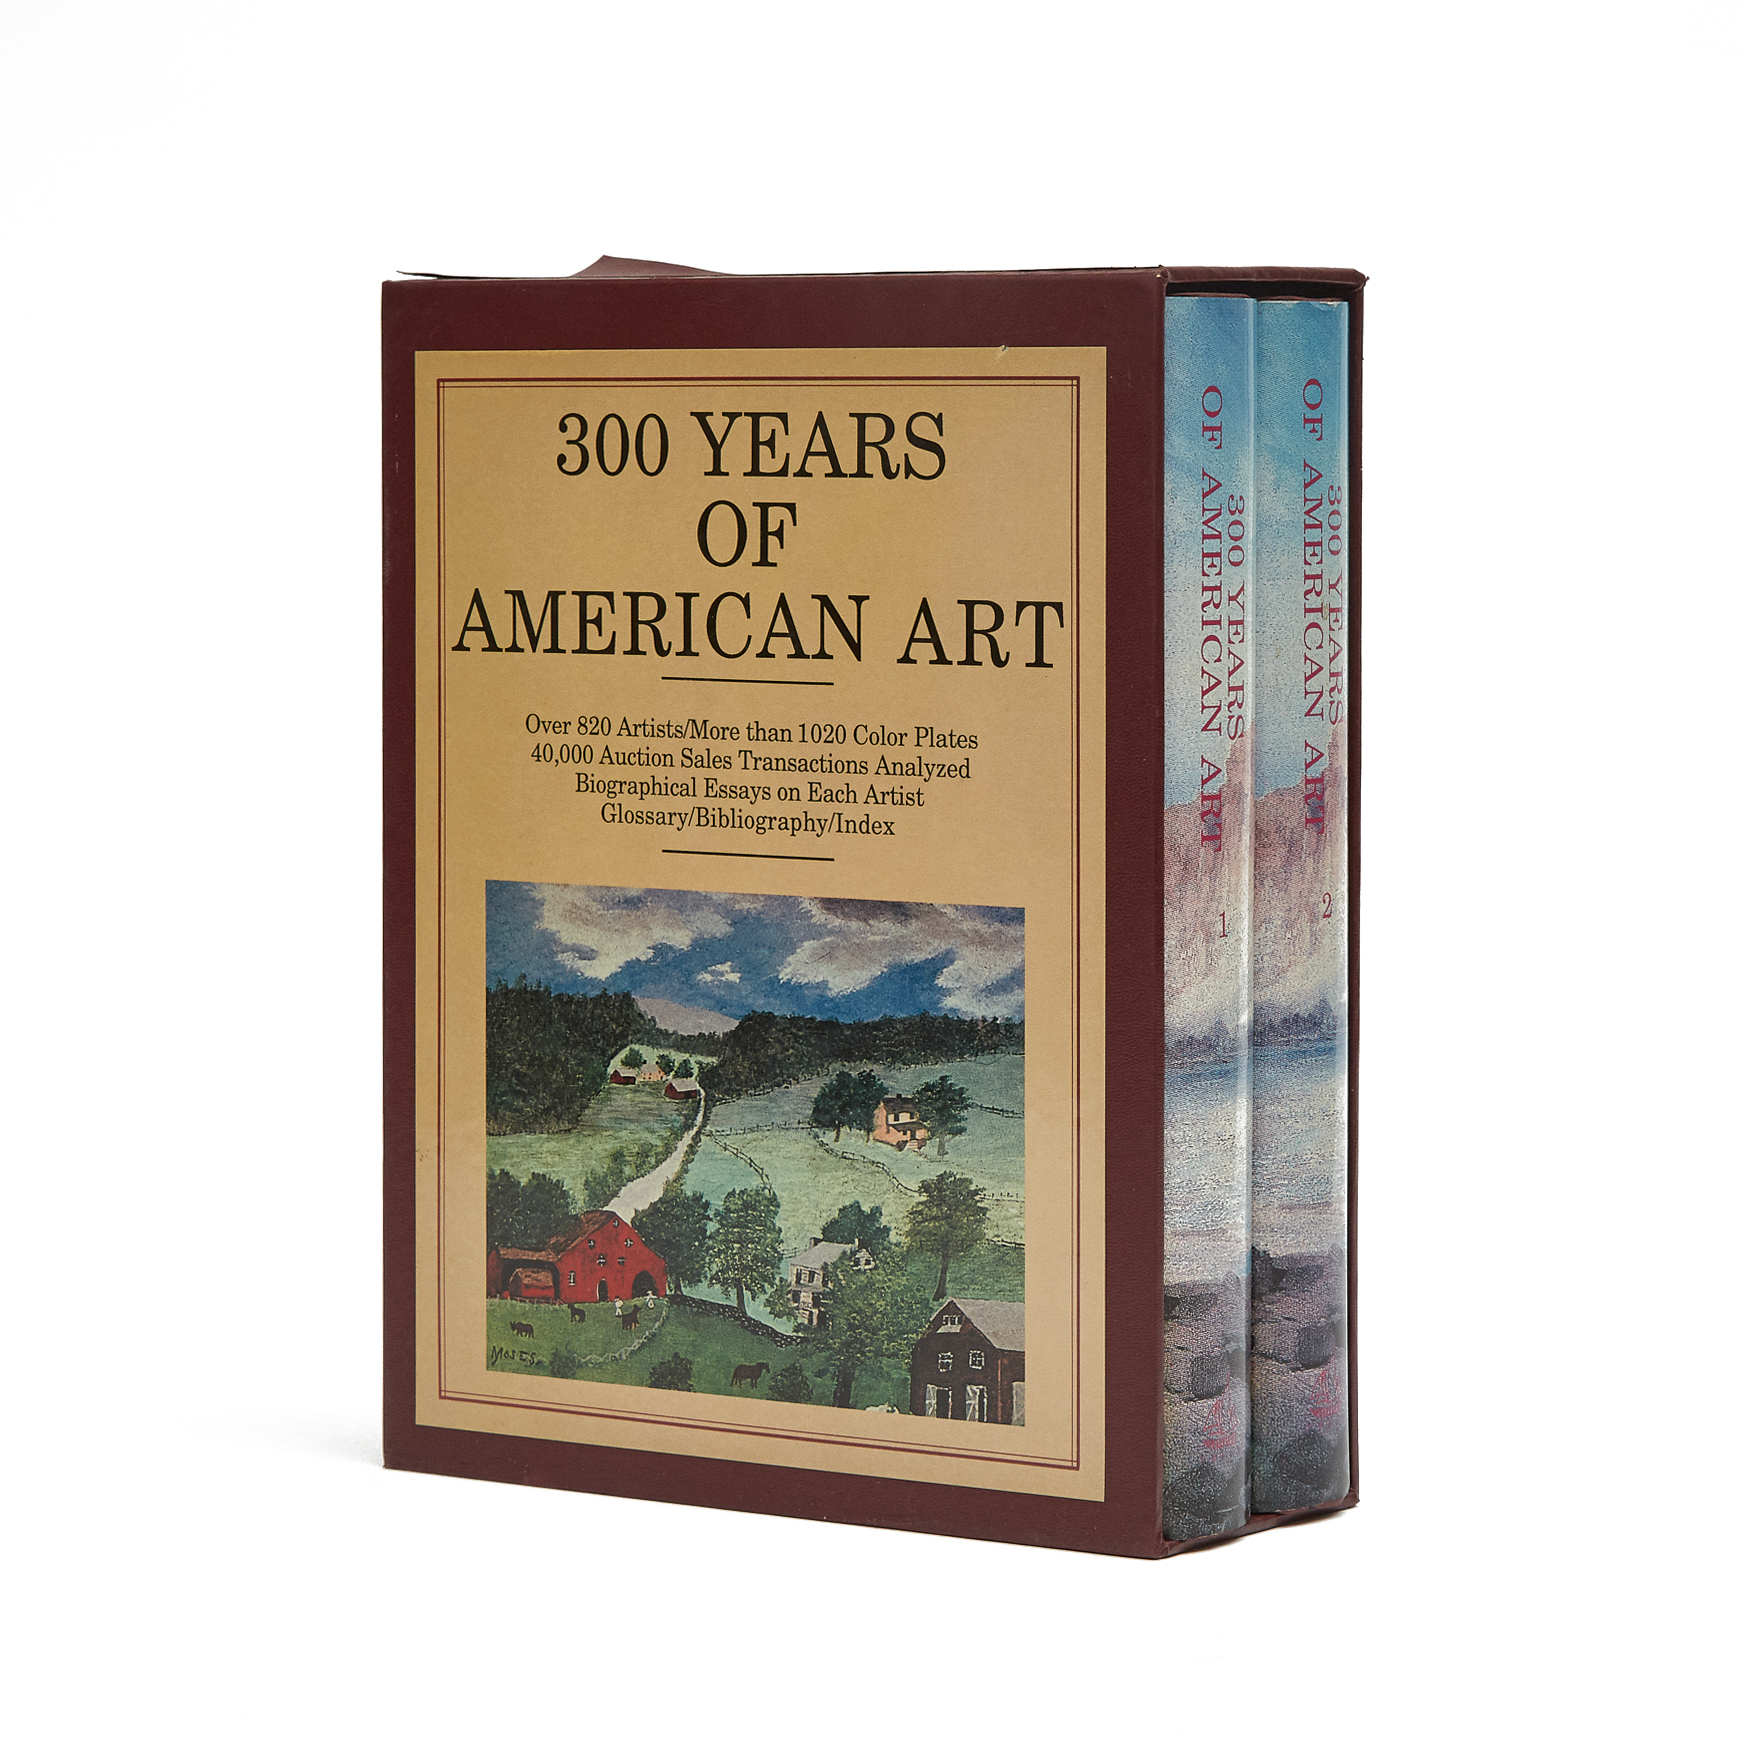 300 YEARS OF AMERICAN ART